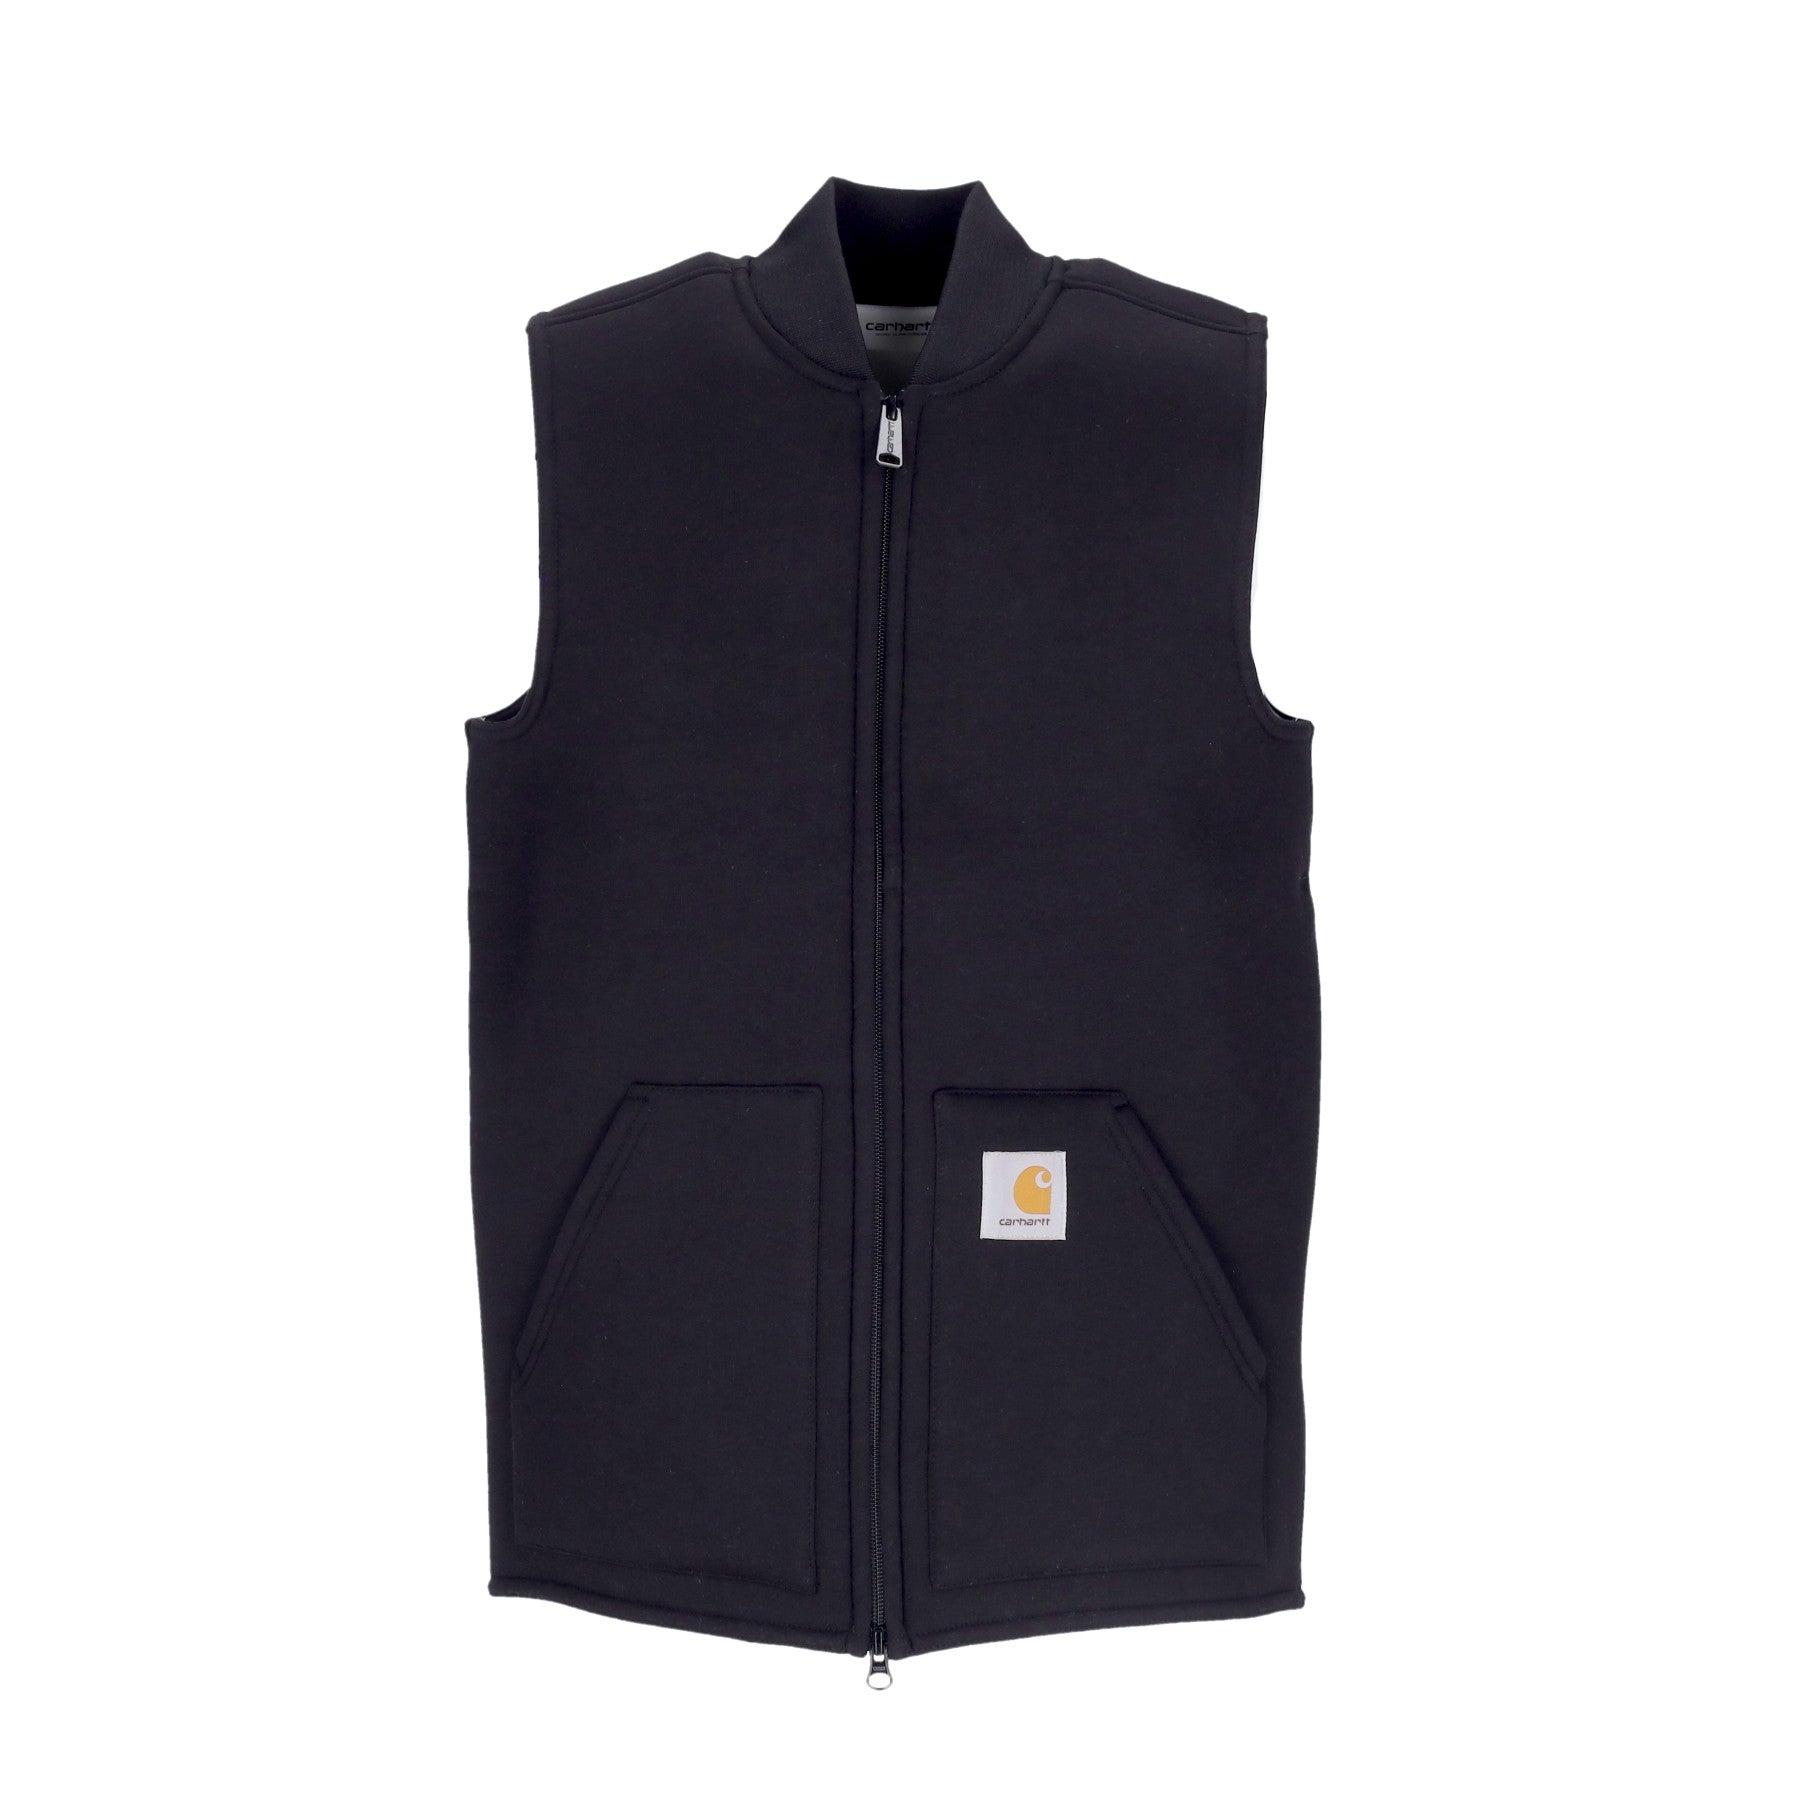 Car-lux Men's Vest Black/grey